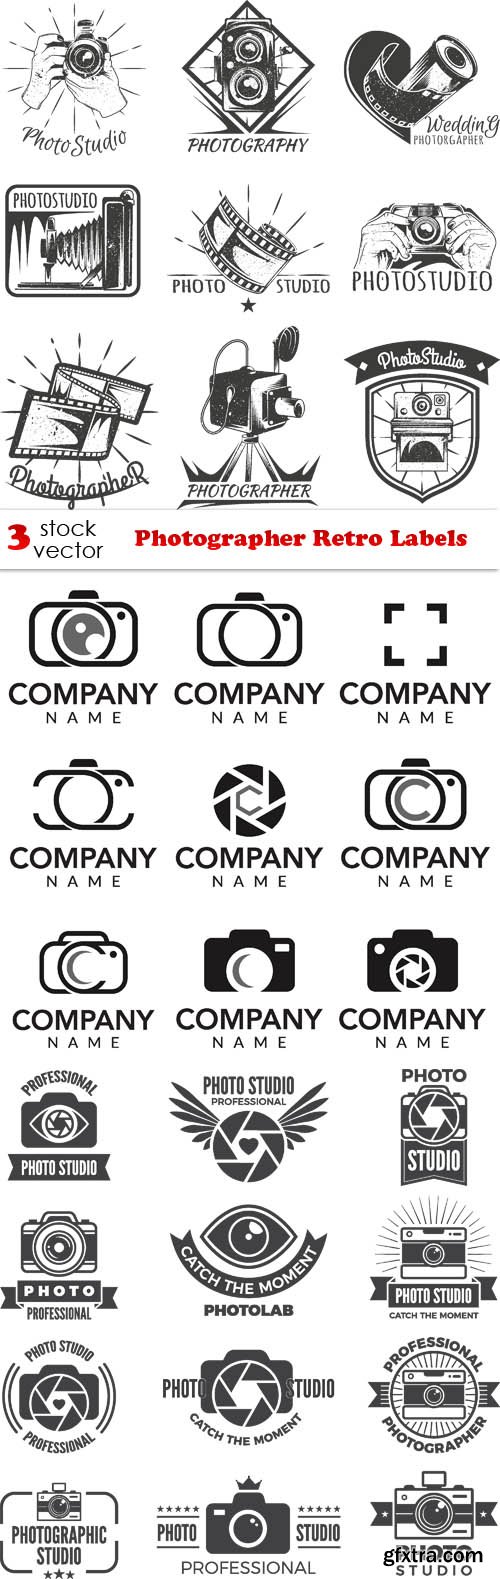 Vectors - Photographer Retro Labels